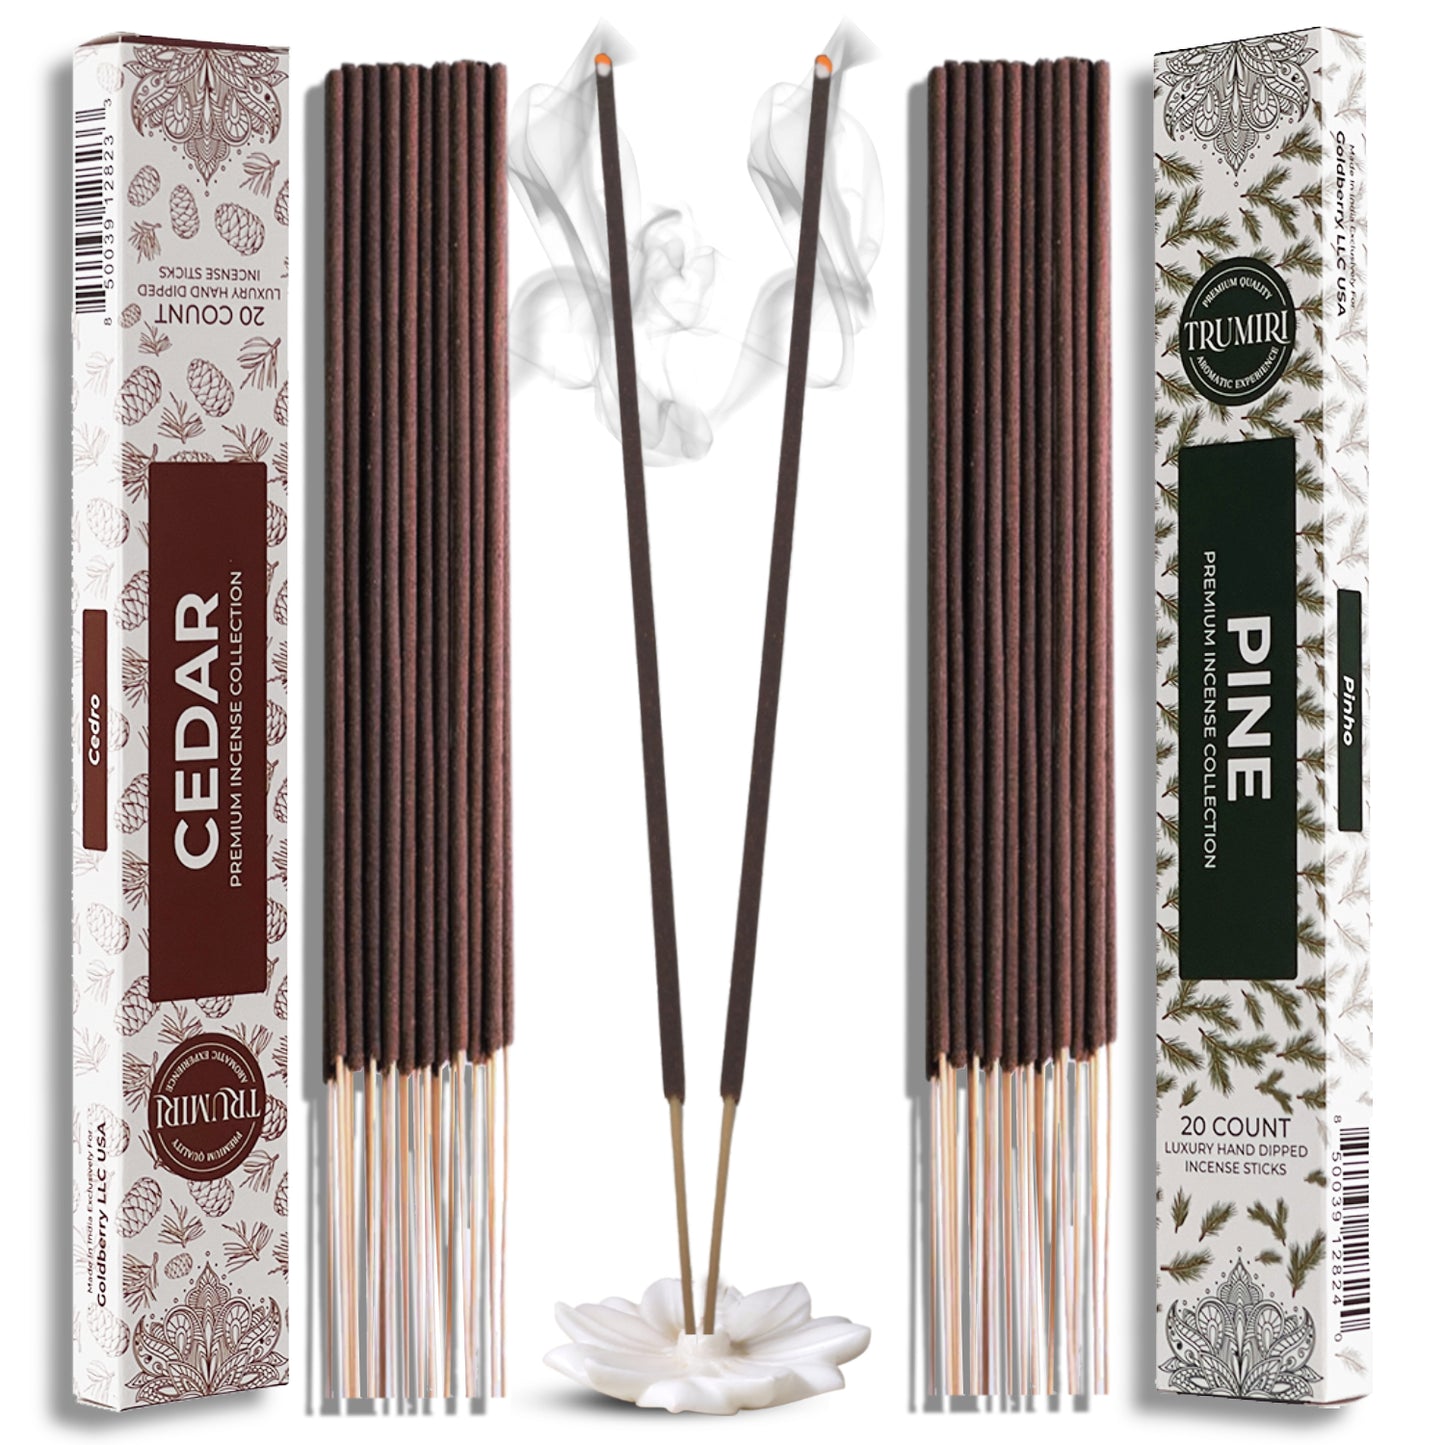 Trumiri Incense Sticks Combo Packs - 20 Sticks per Scent - Total 40 Incense Sticks